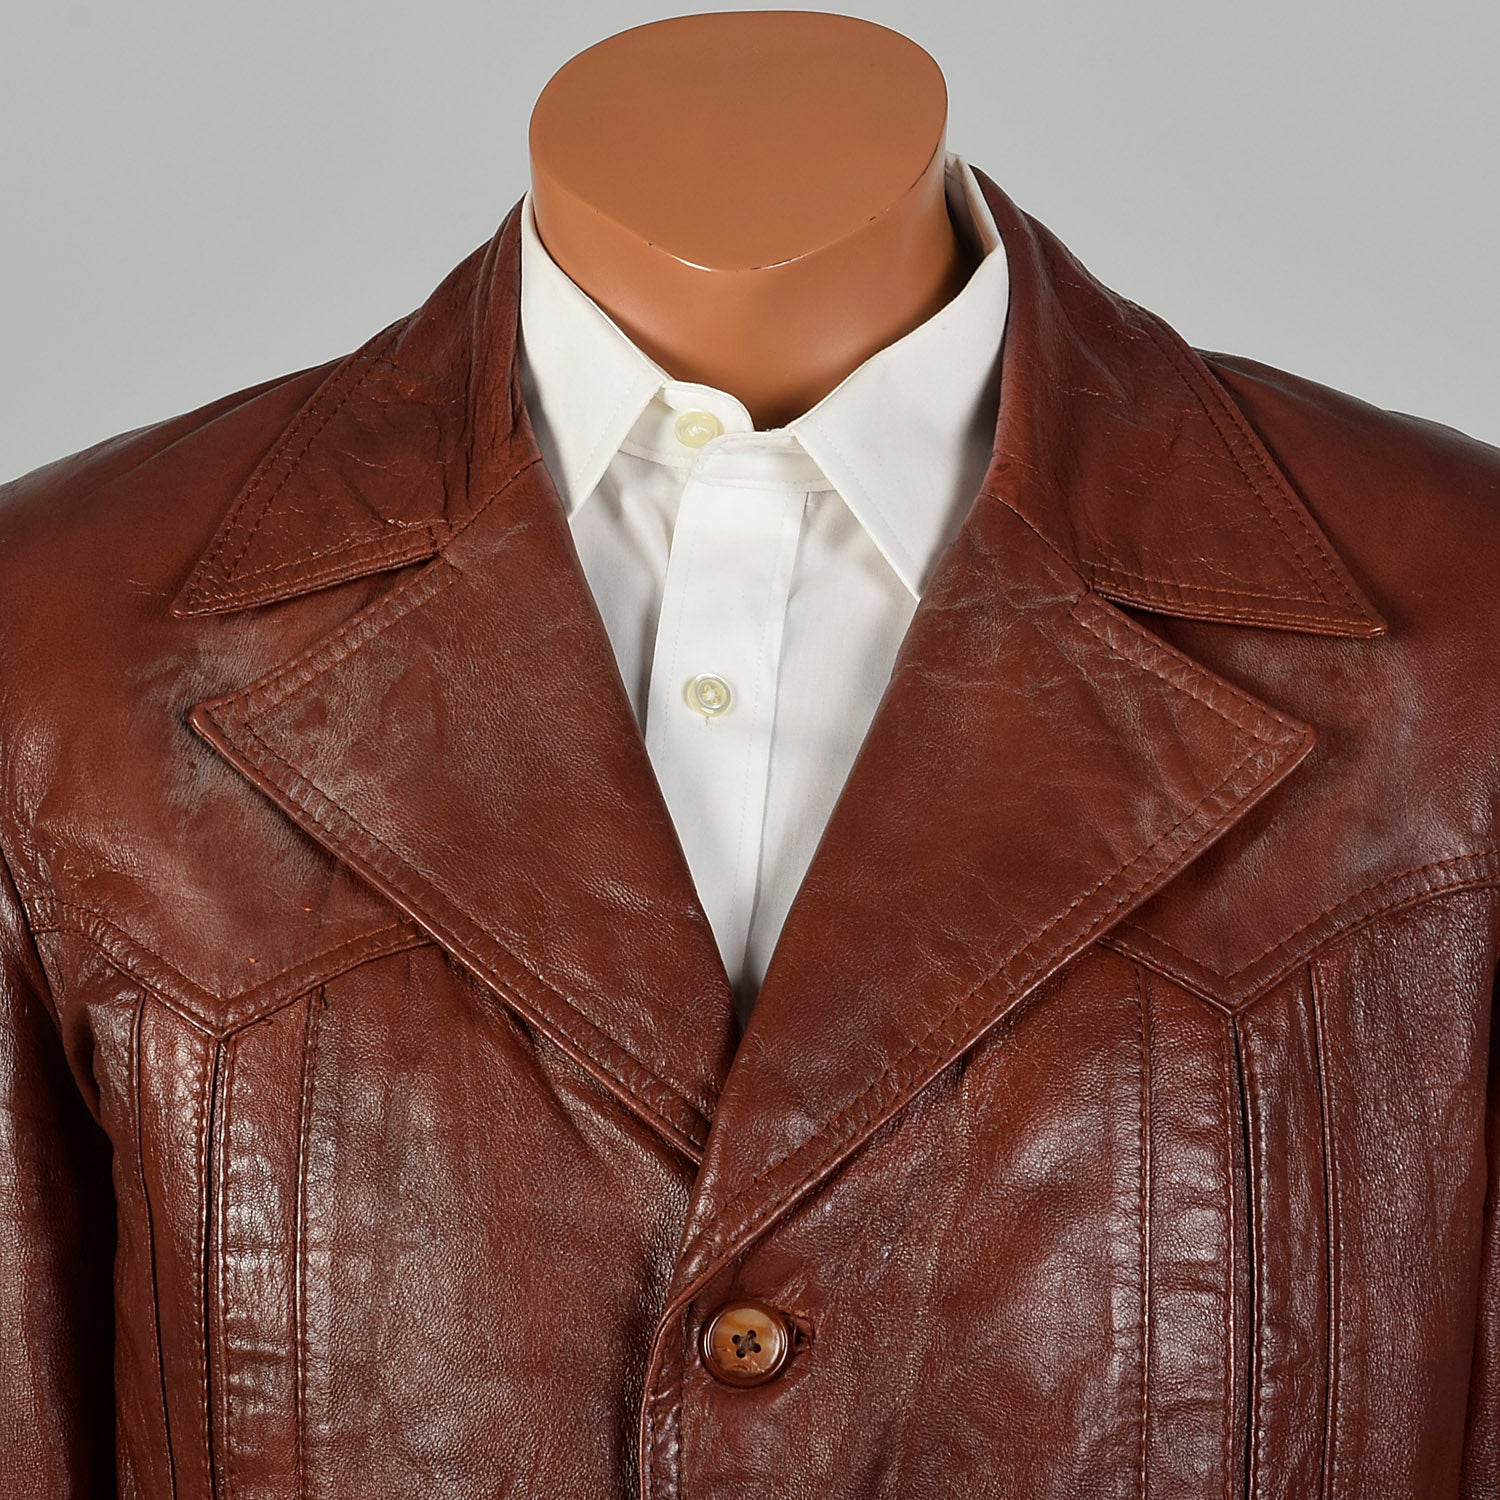 Medium 1970s Men's Burgundy Leather Jacket